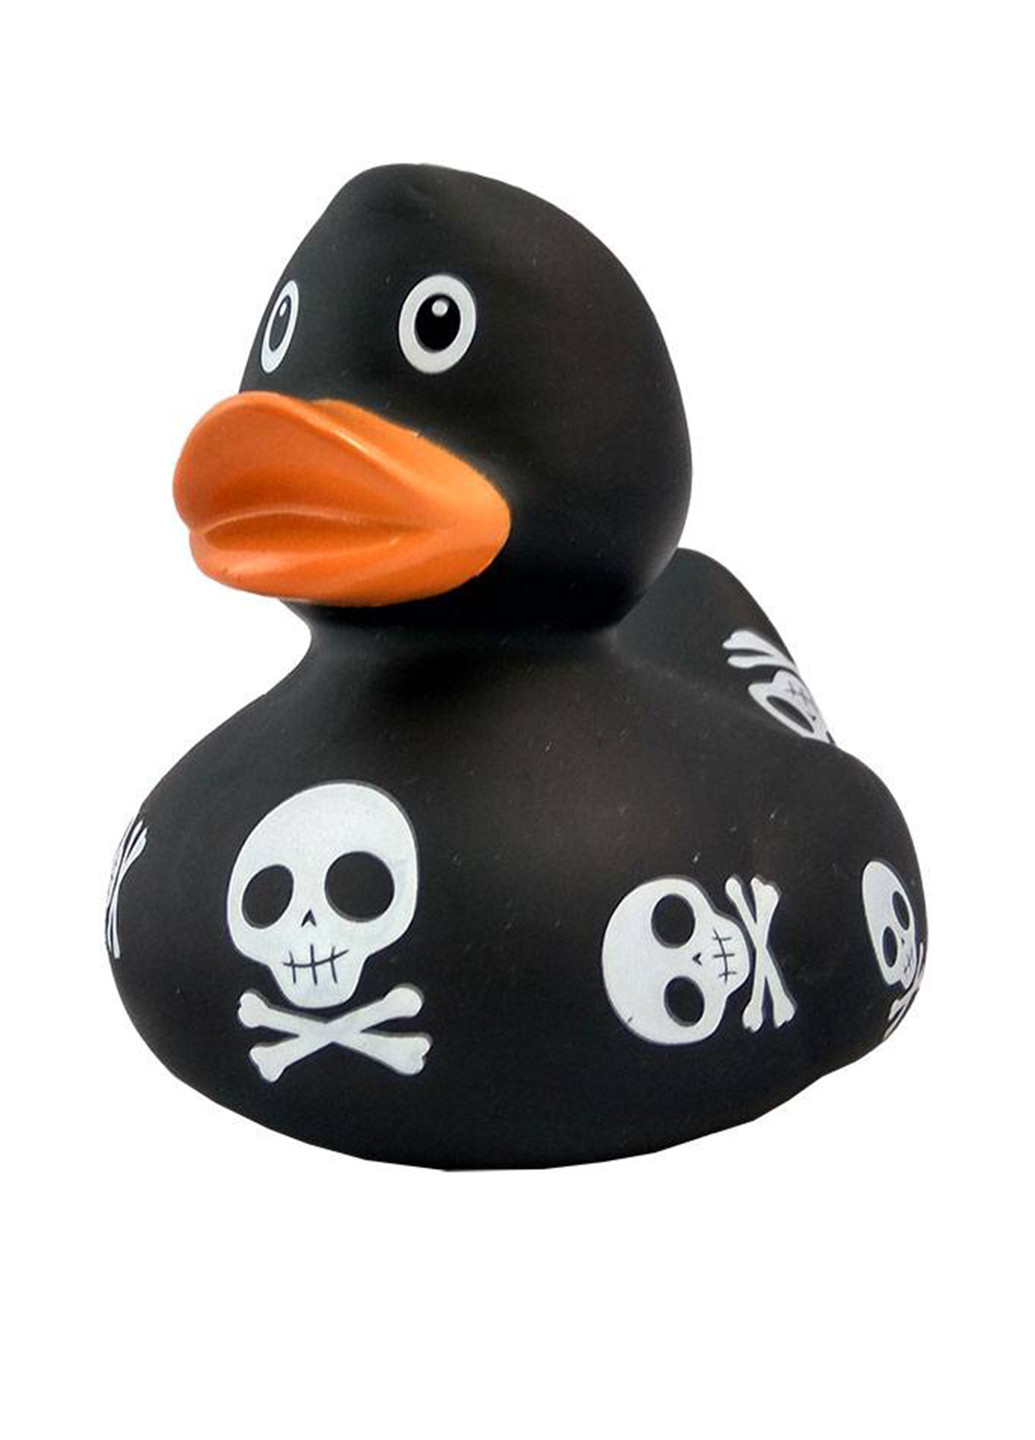 Игрушка для купания Утка Череп, 8,5x8,5x7,5 см Funny Ducks (250618786)